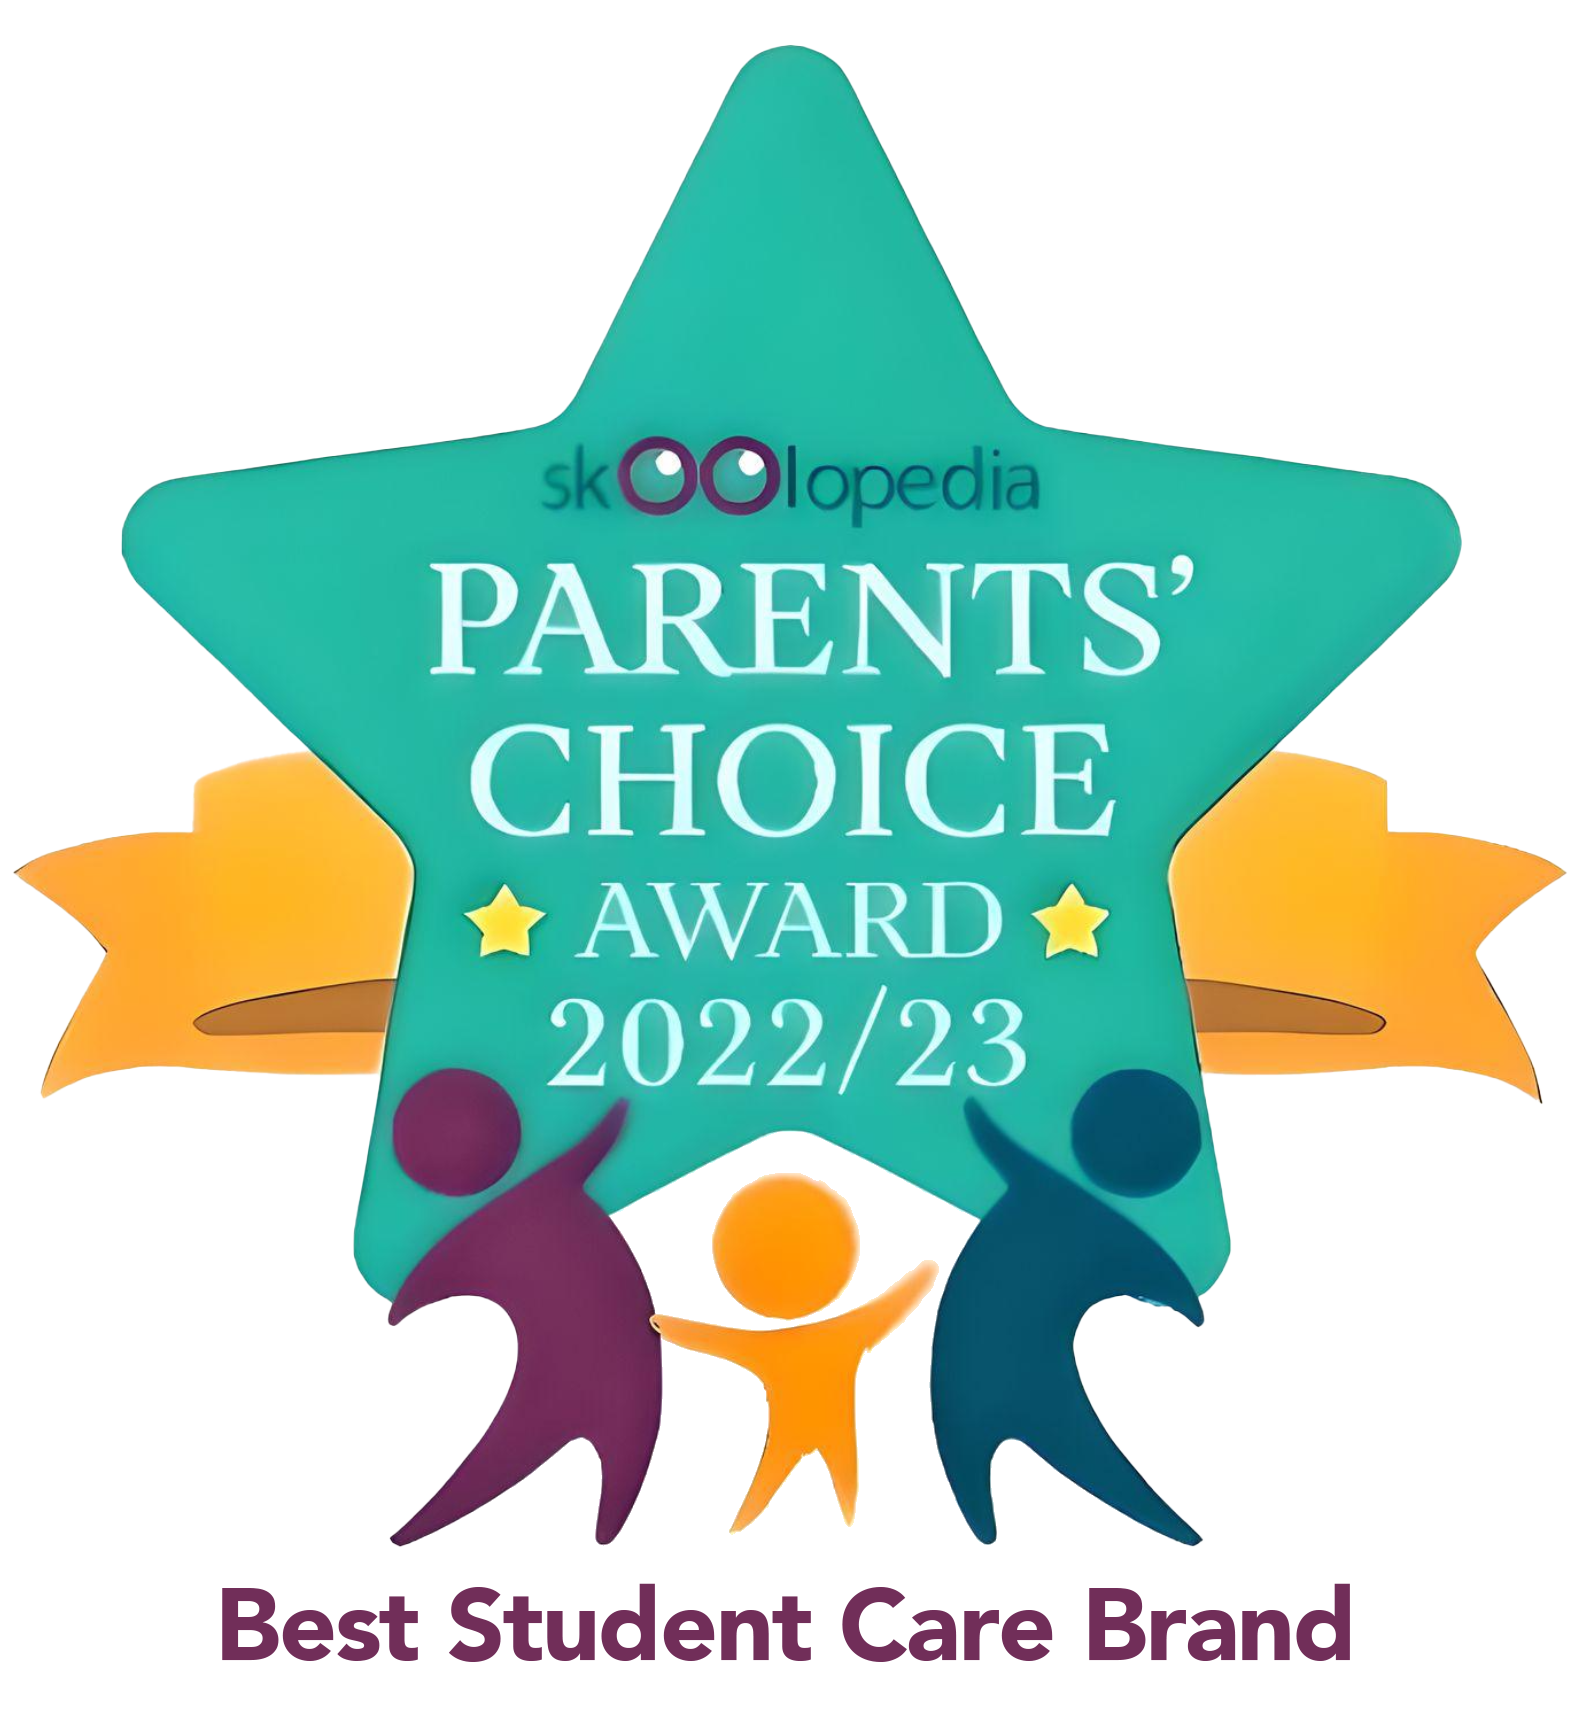 Skoolopedia Parents' Choice Award 2022/2023 - Best Student Care Brand 